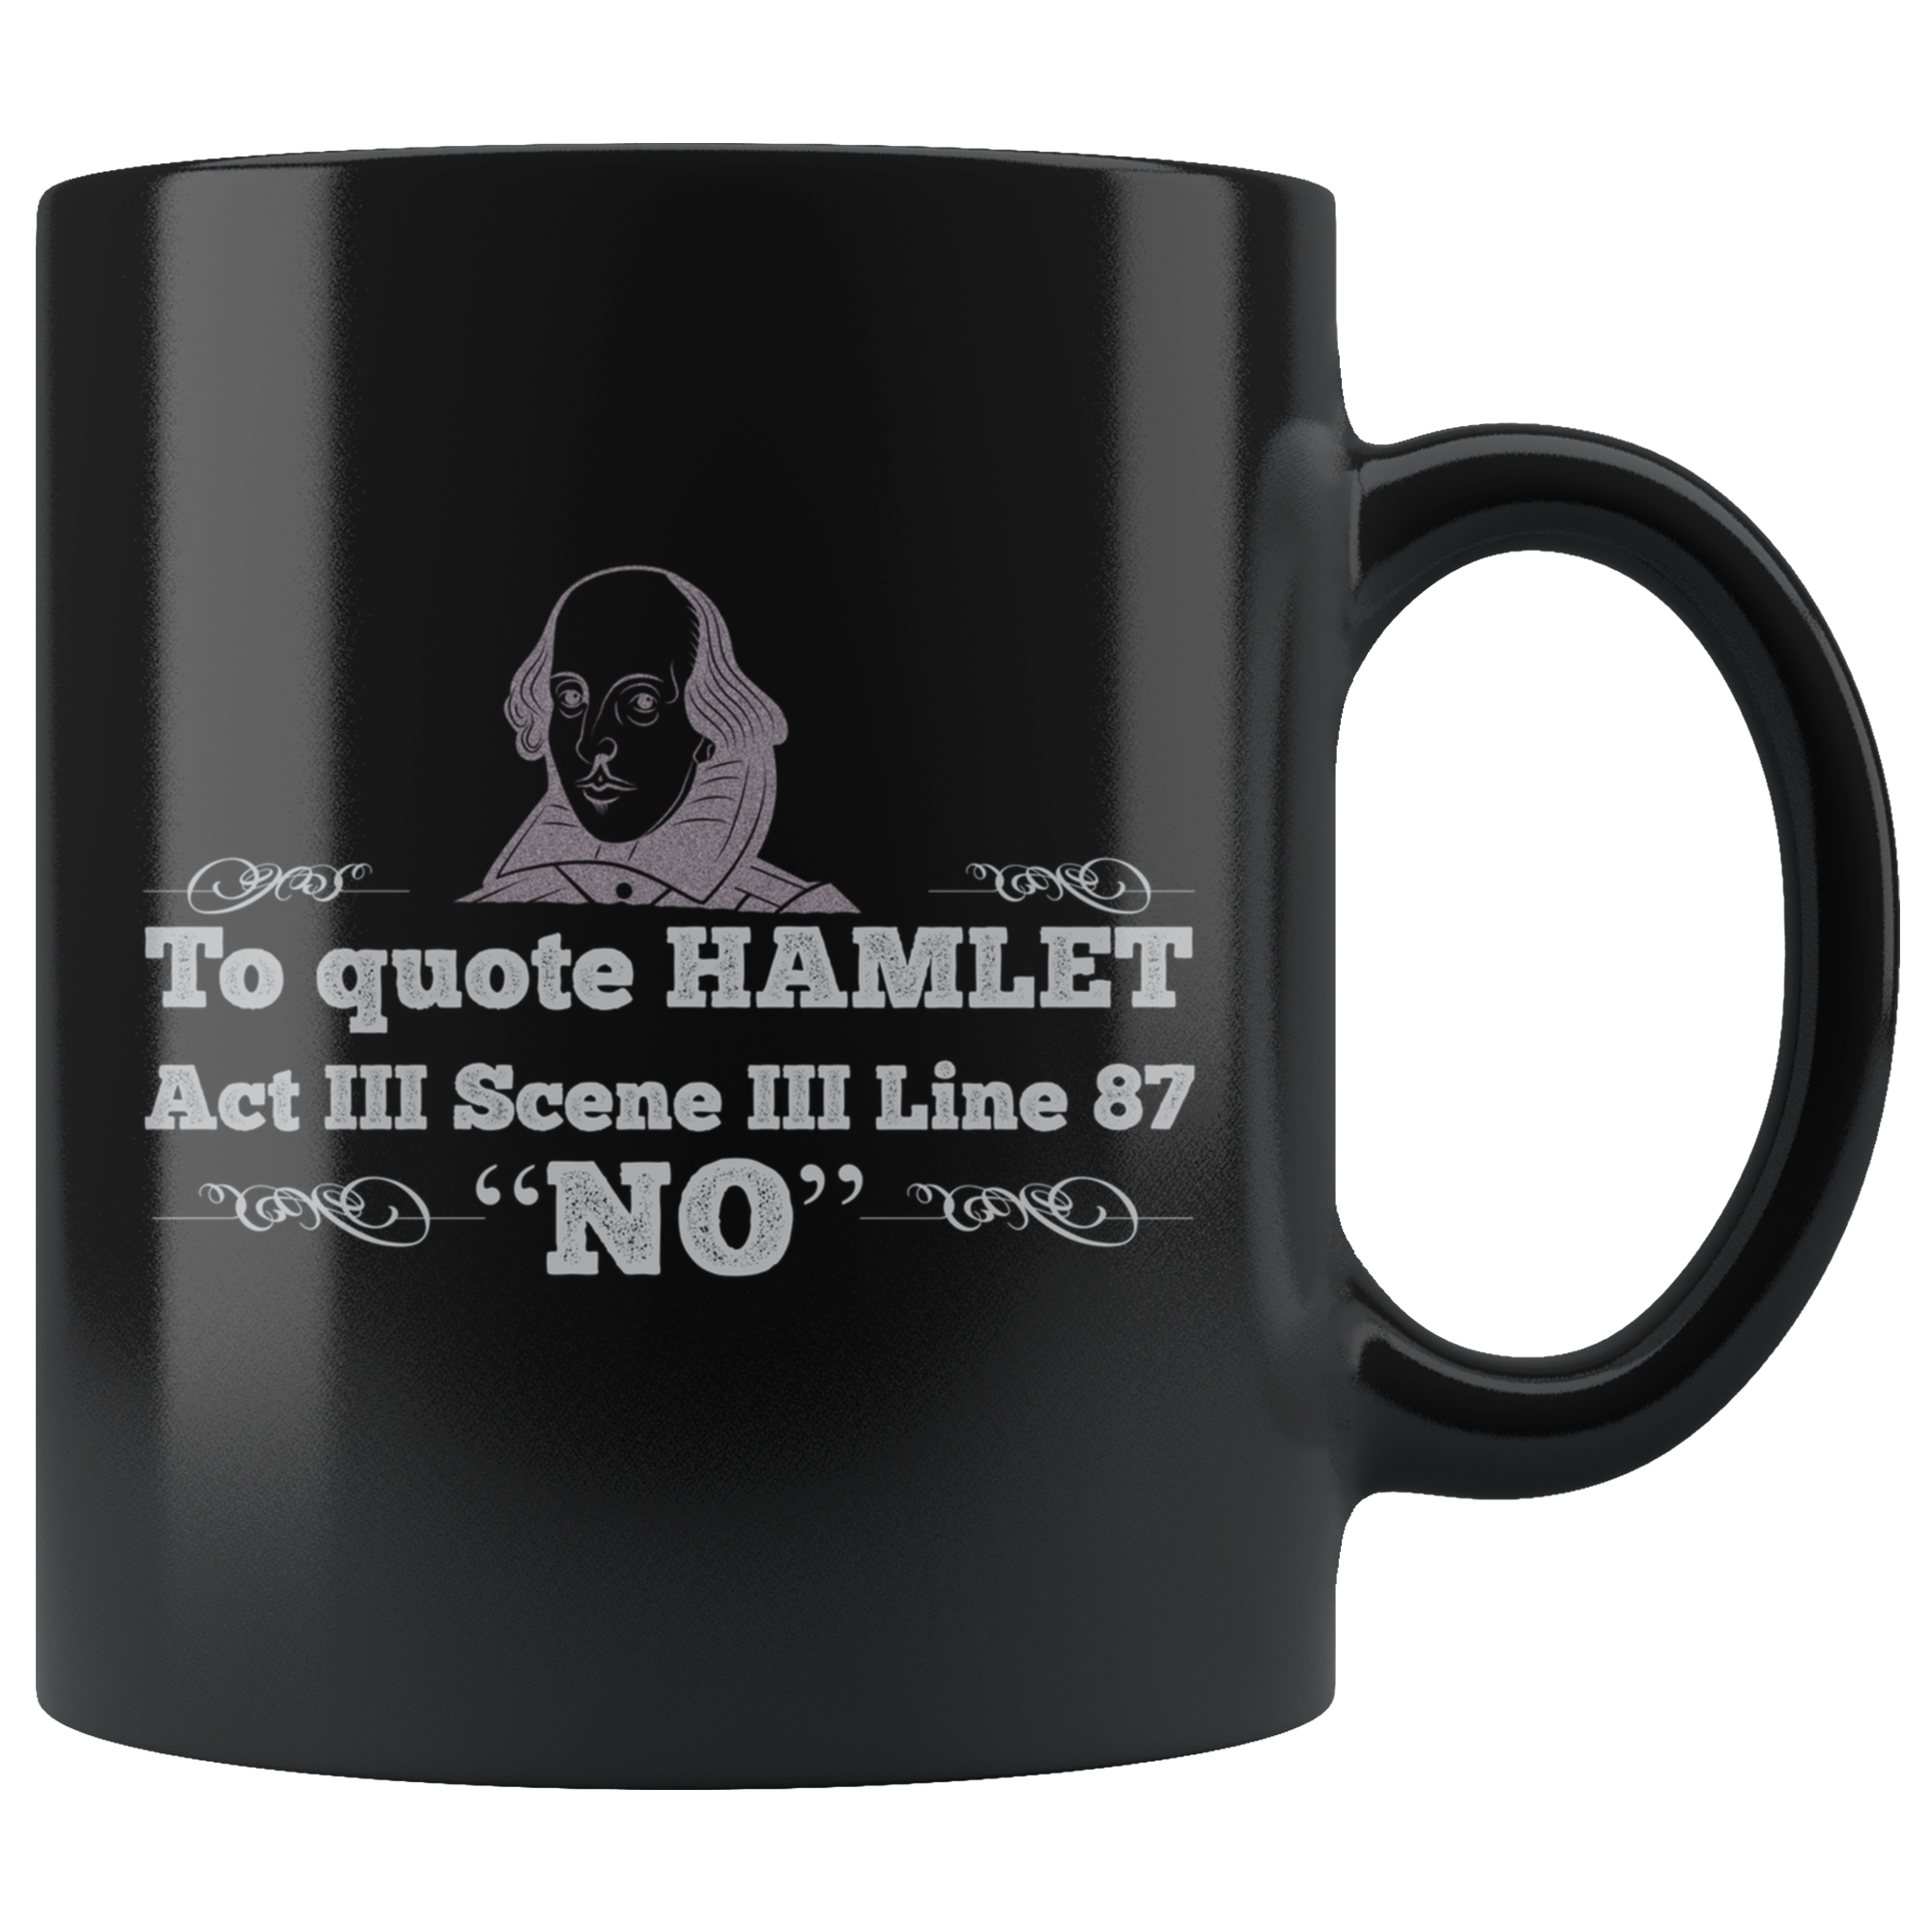 The Shakespeare Mug